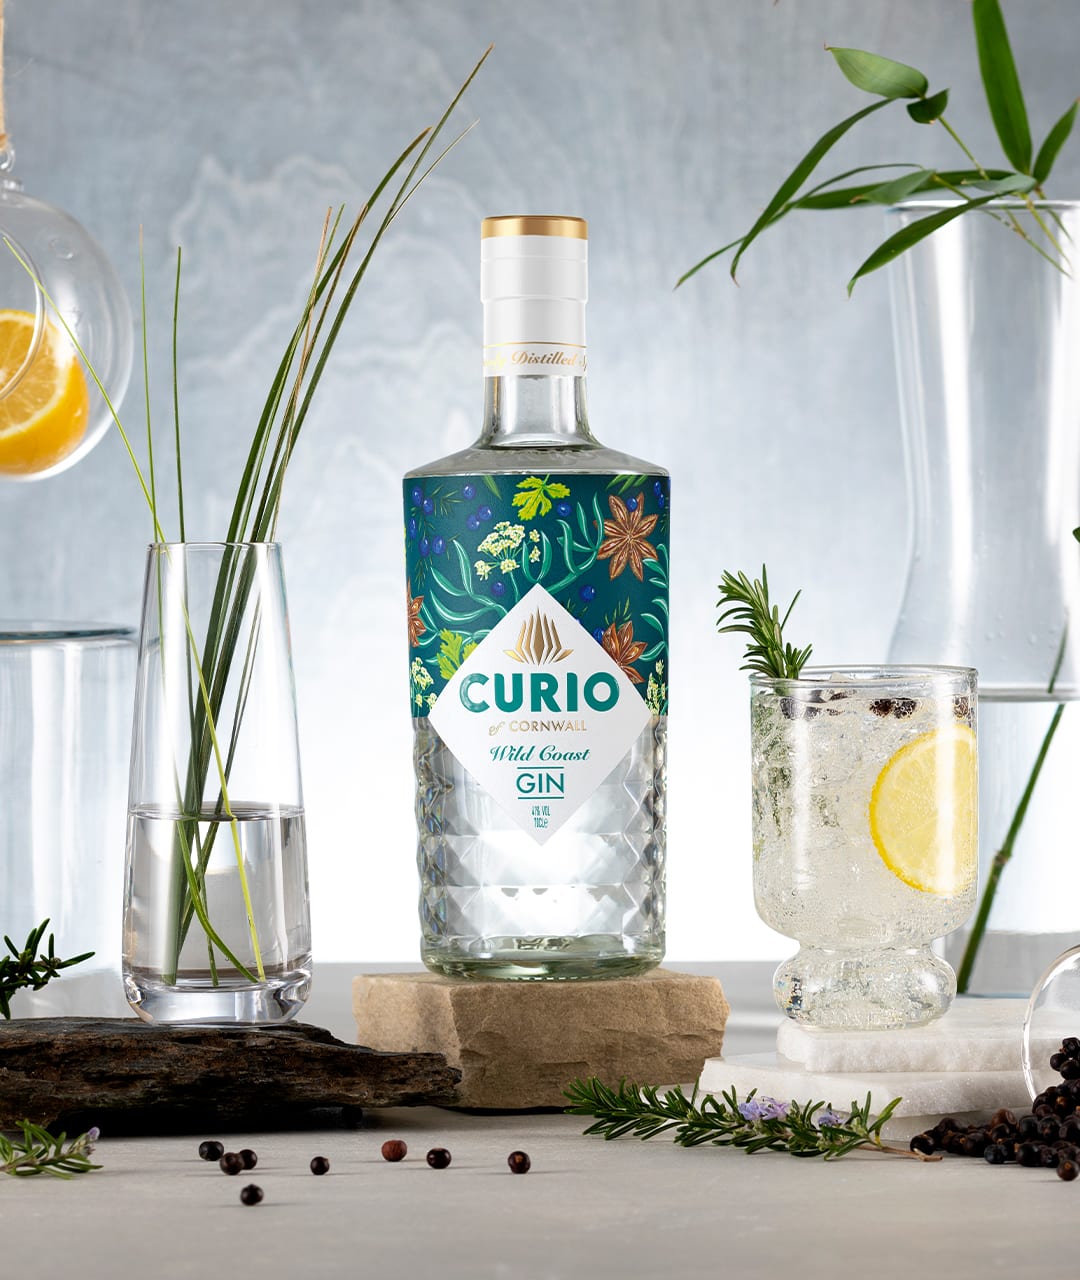 Curio wild coast gin bottle amongst garnishes and glassware